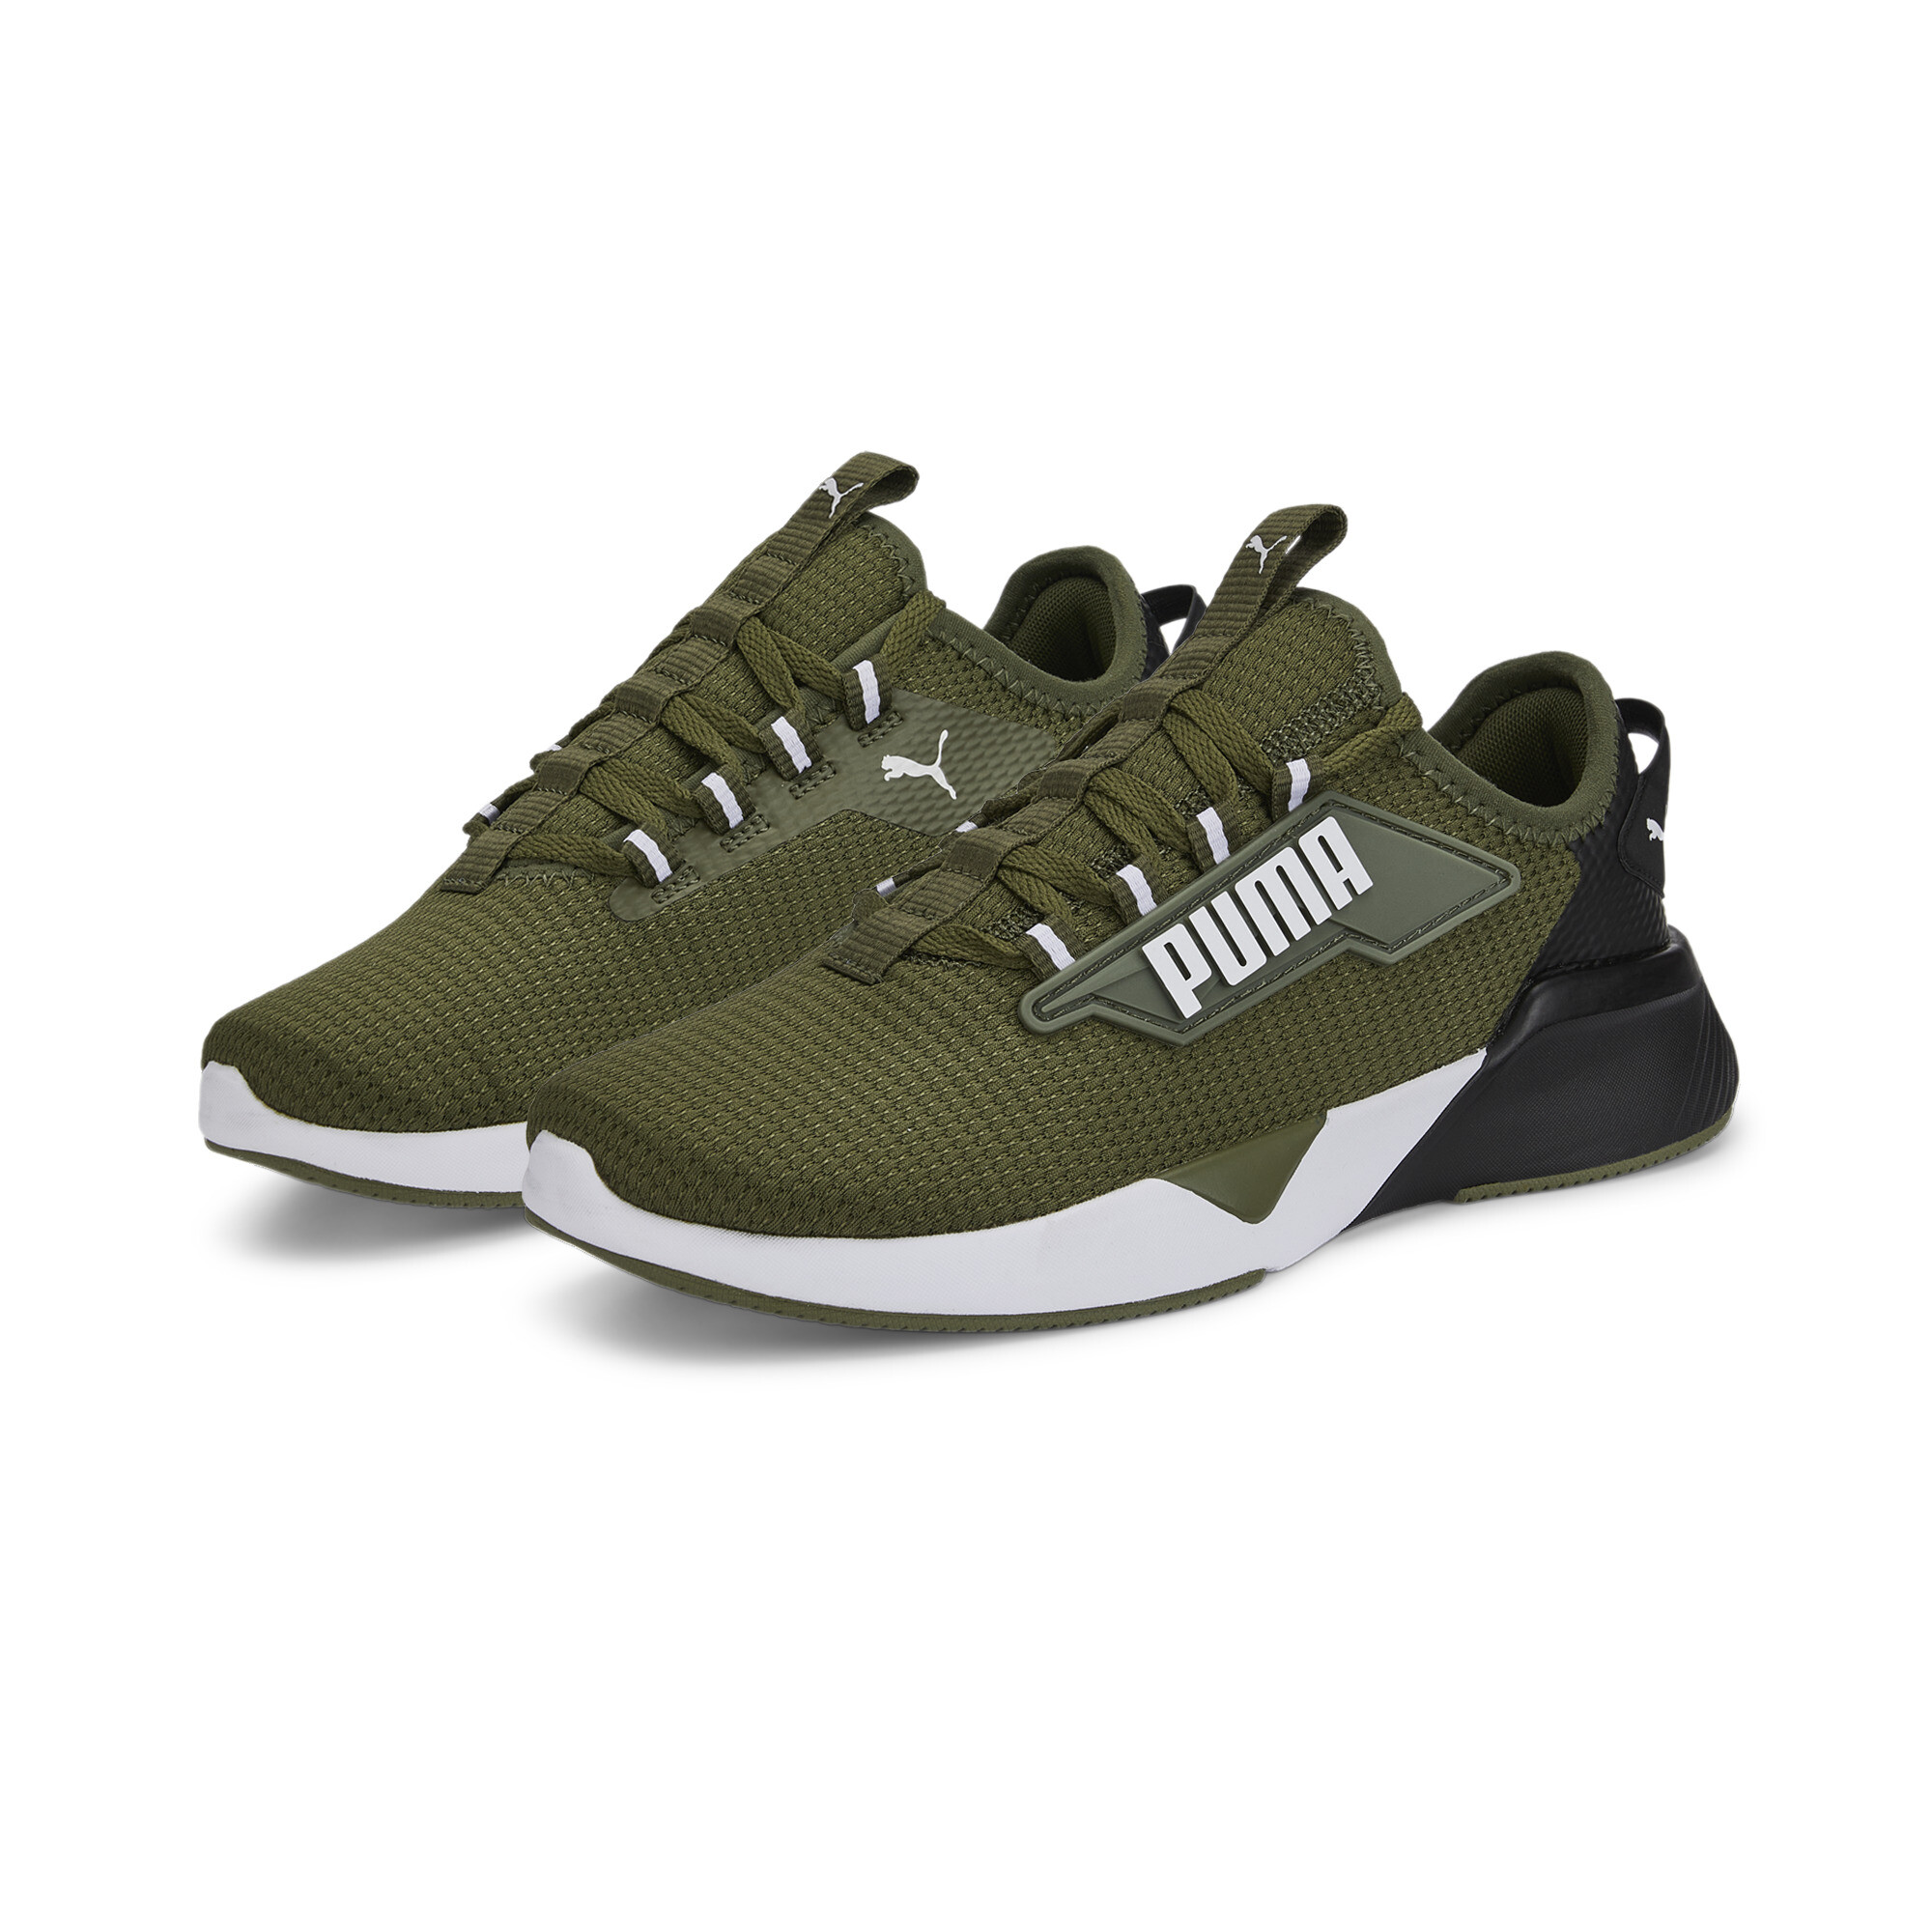 Puma Retaliate 2 Sneakers Youth, Green, Size 37.5, Shoes